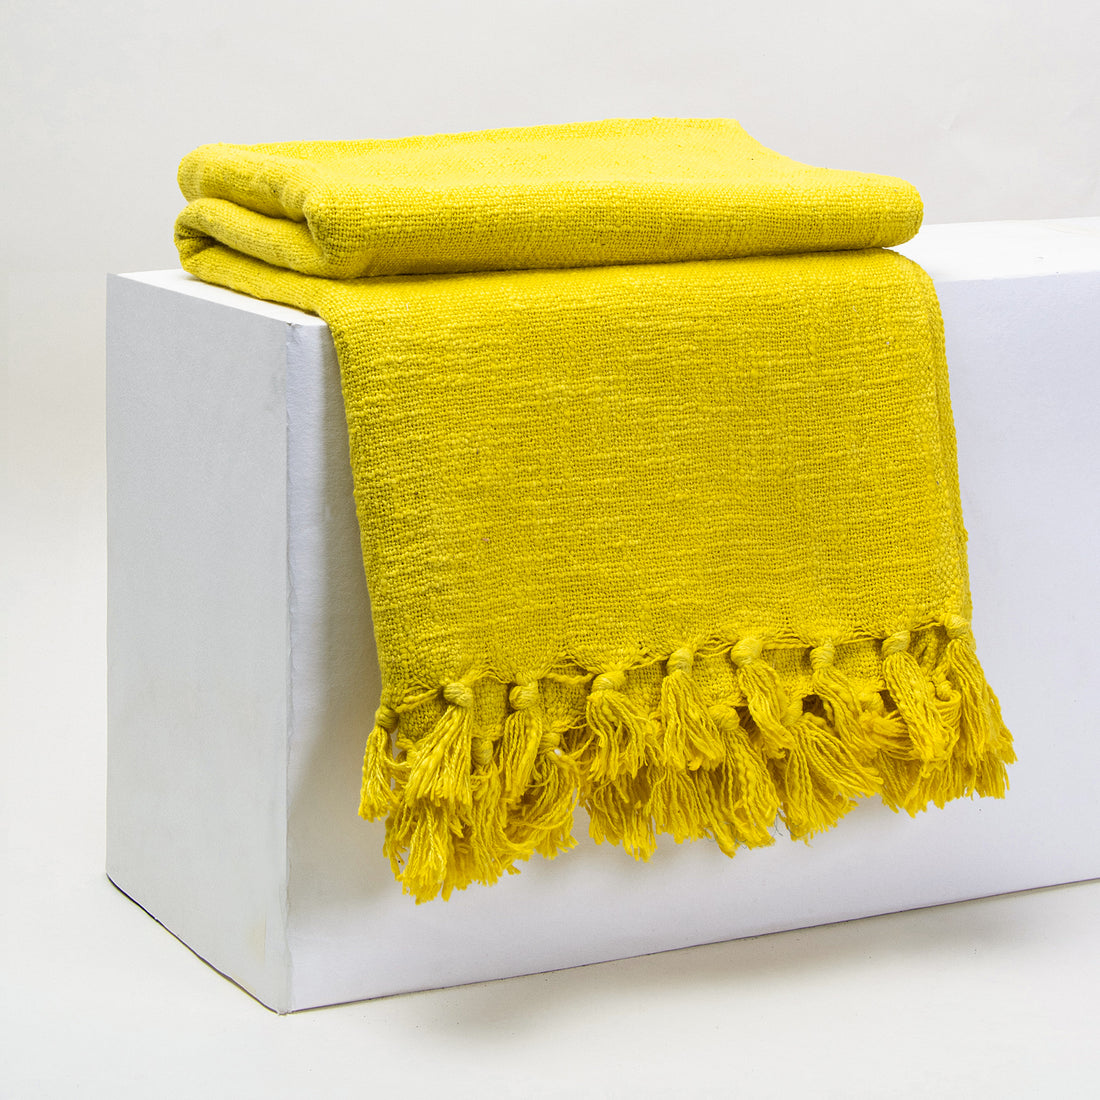 Online Mustard Yellow Solid Color Throw Blanket